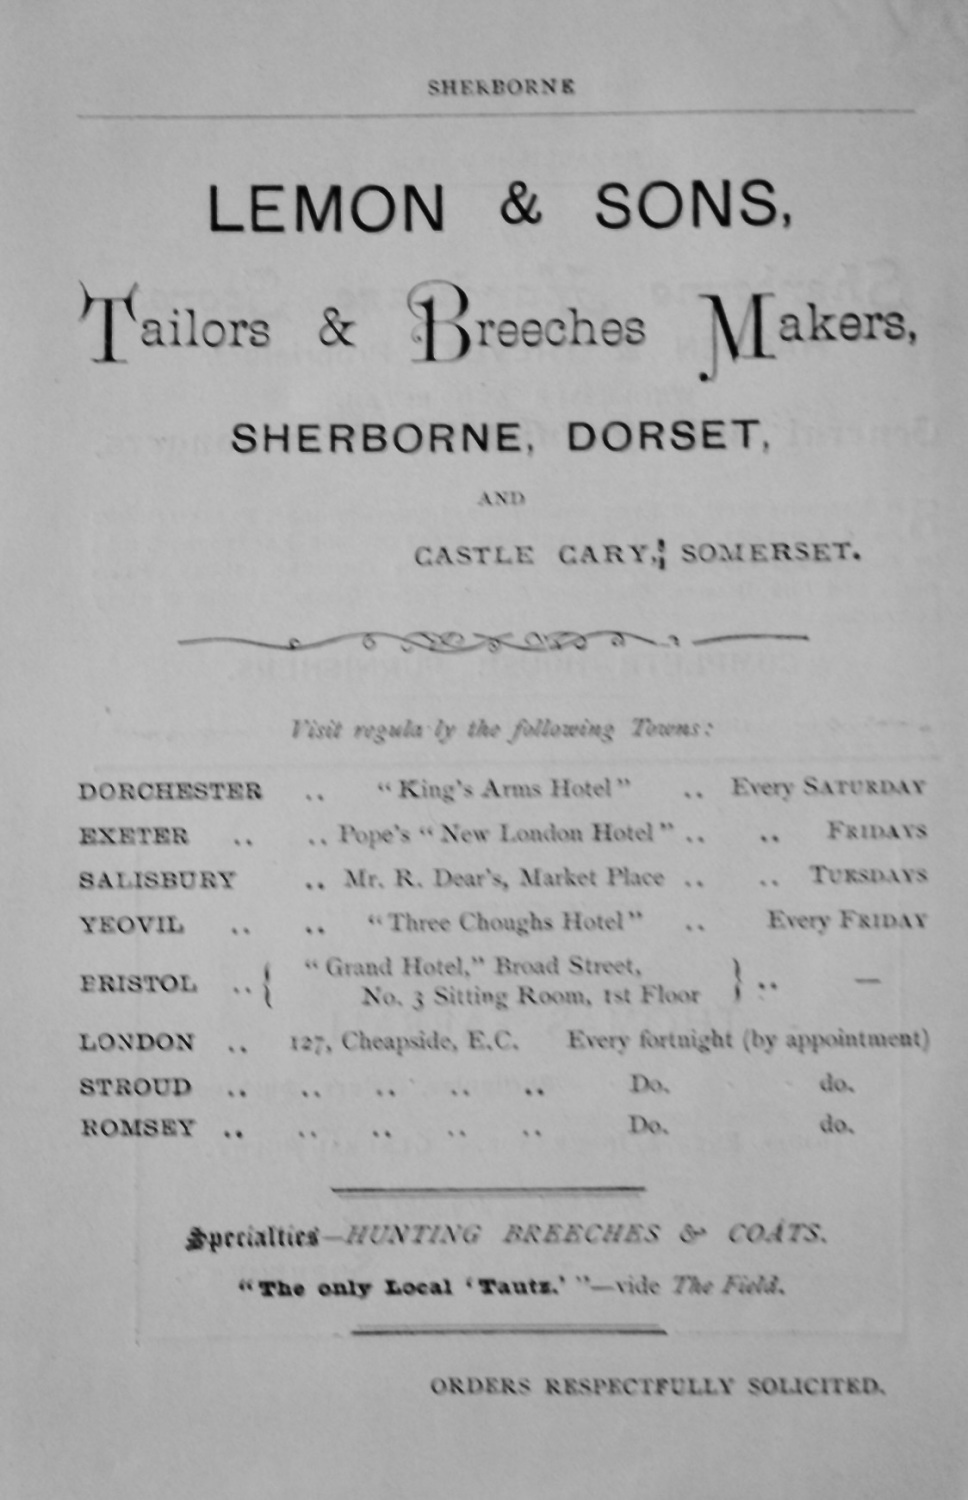 Lemon & Sons, Tailors & Breeches Makers, Sherborne, Dorset, and Castle Cary